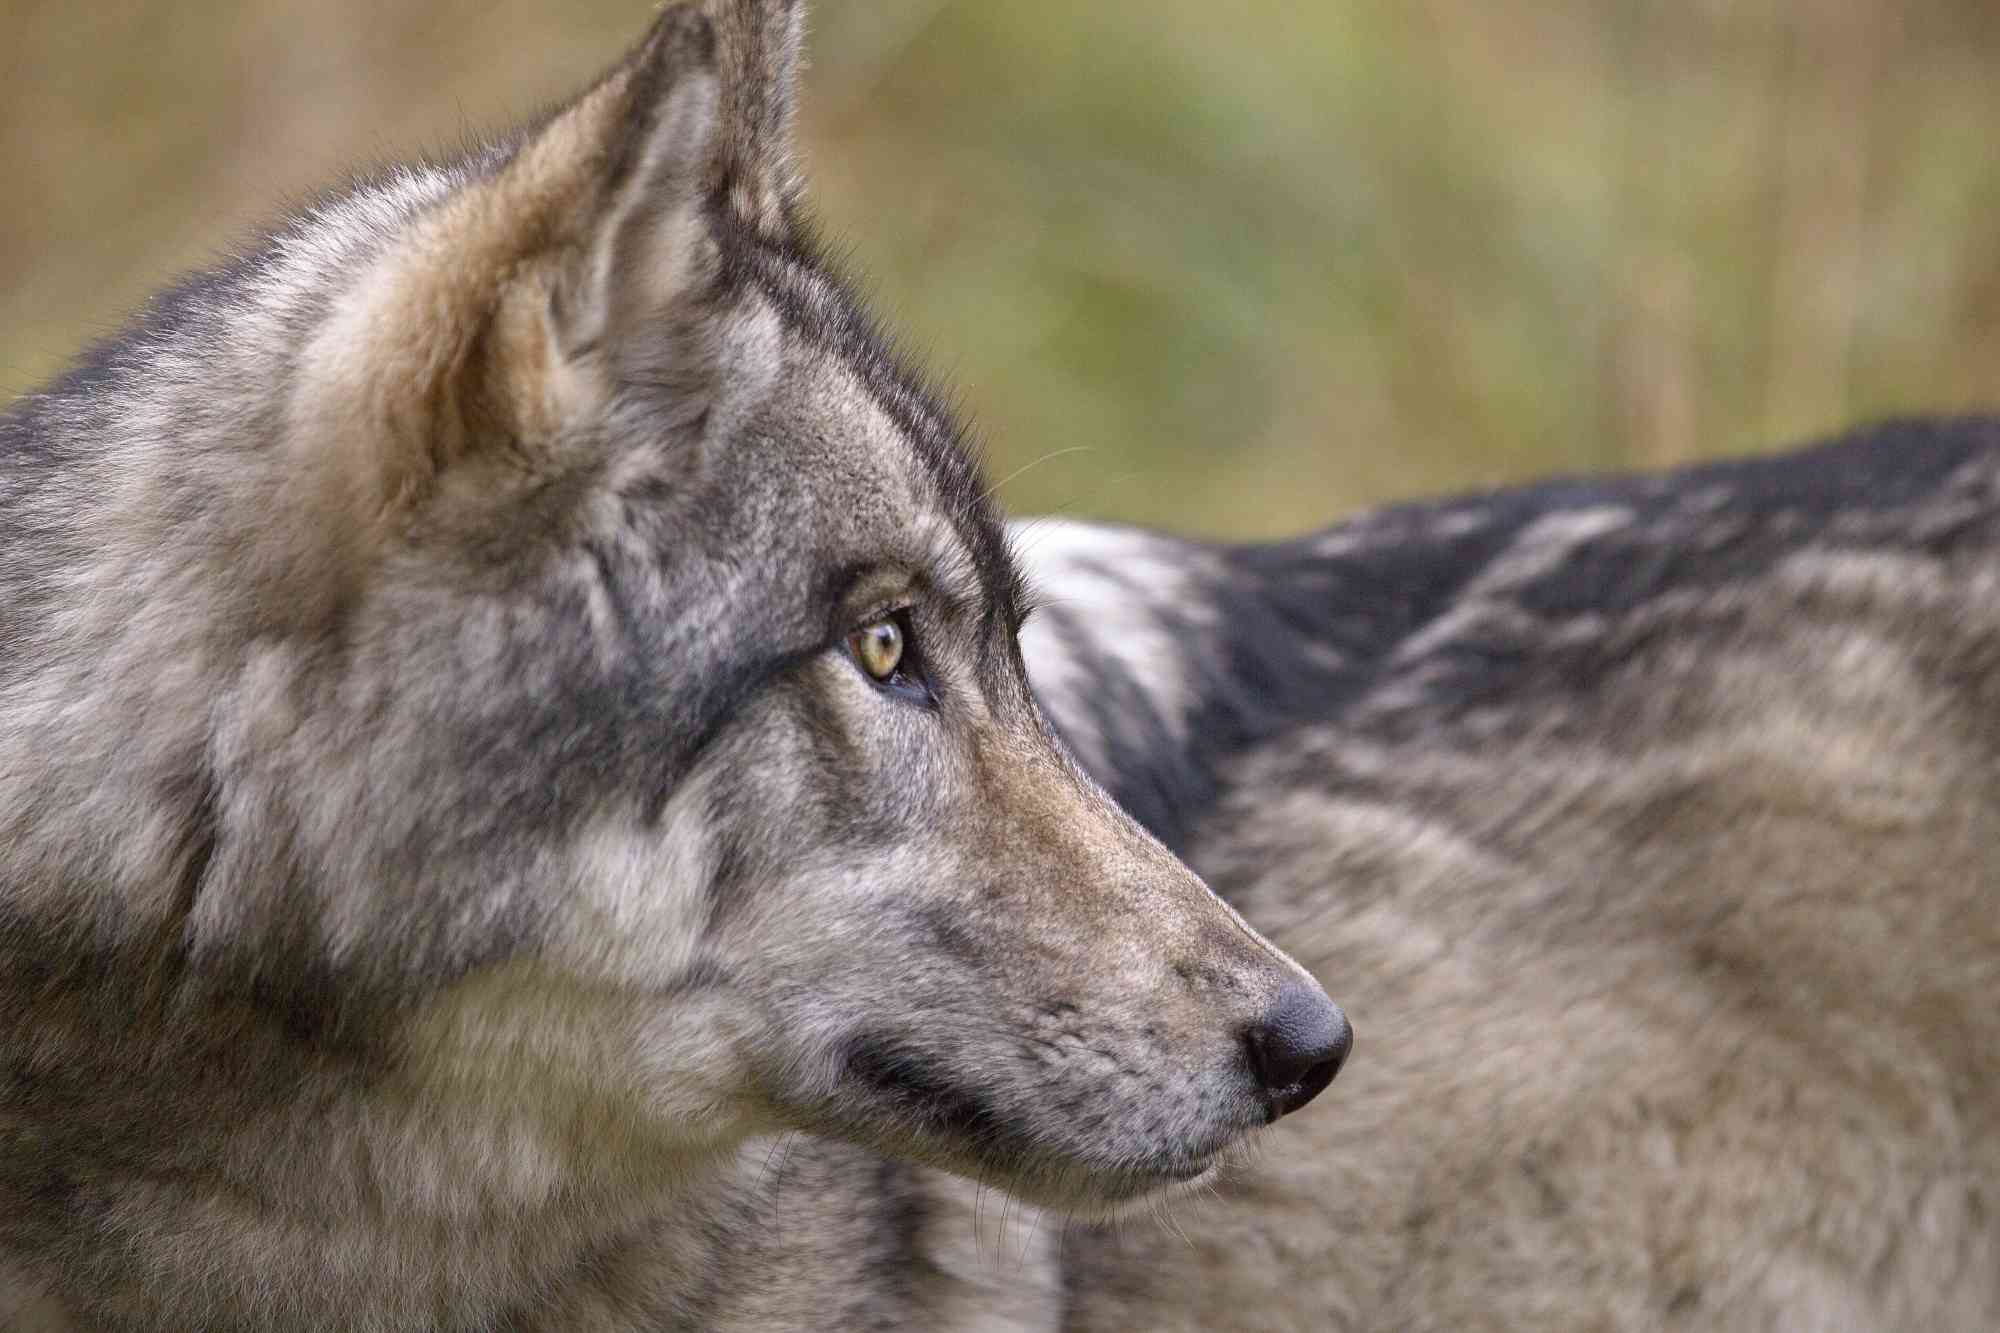 Wolves : Tags: Animal Rights , Animal Welfare , News